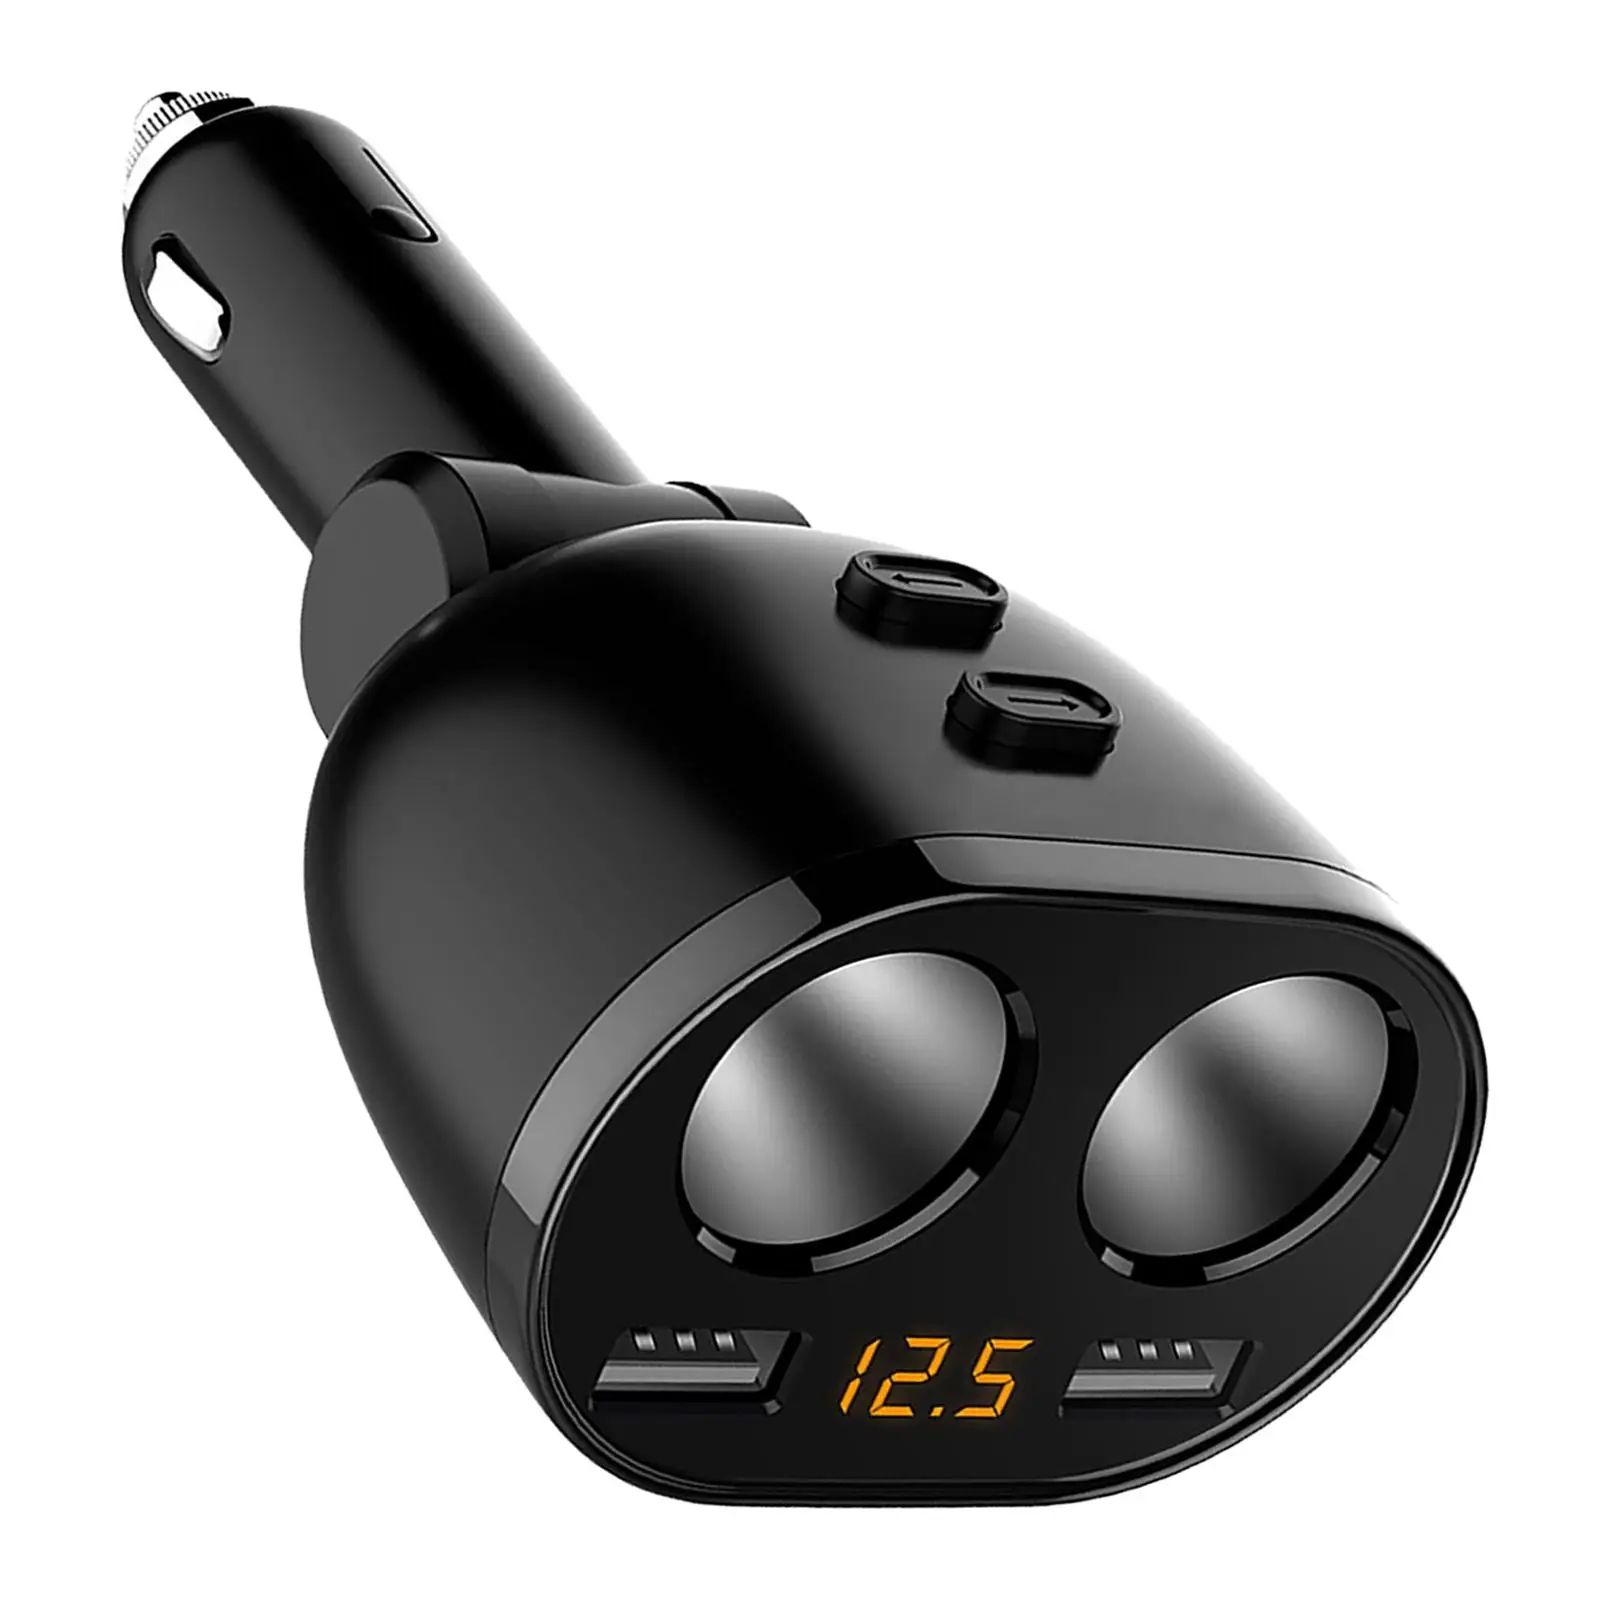 Car Dual USB 2 Cigarette Lighter Sockets Adapter Charger 80W Socket Splitter for Smartphones Digital Products cam GPS